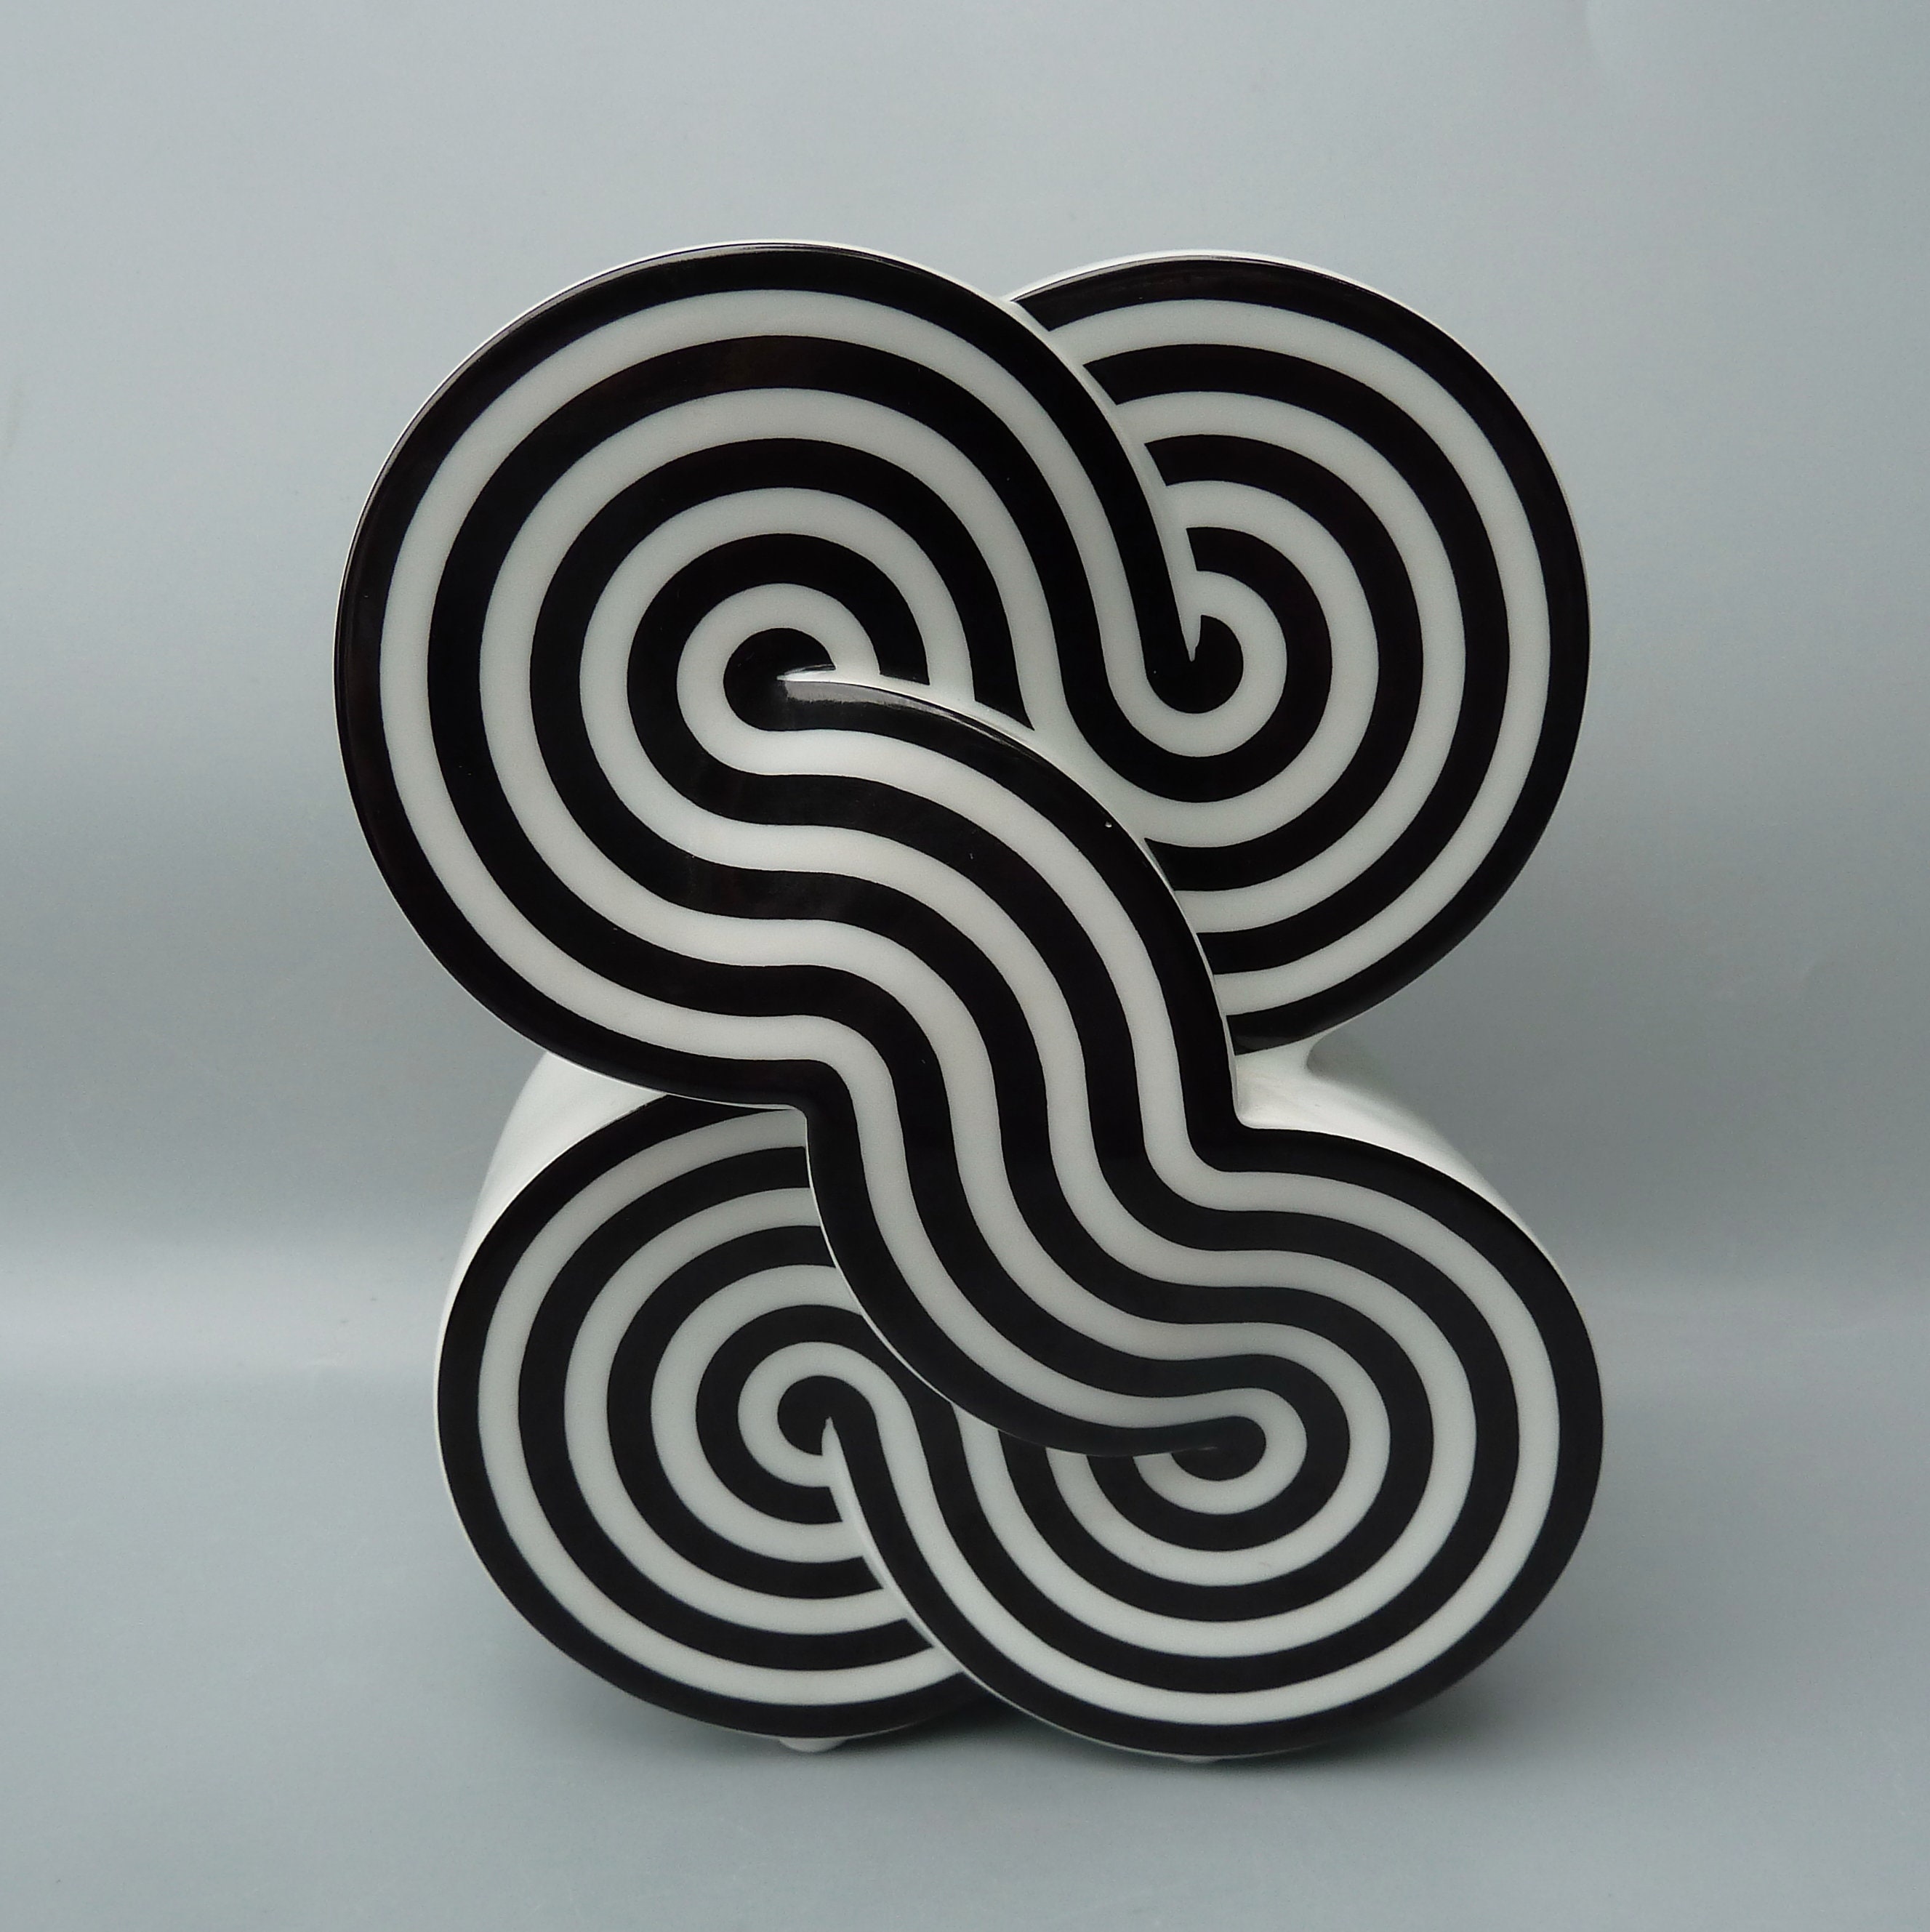 Op Art Spiral Swirl Stock Vector by ©raymondgibbs 105822412